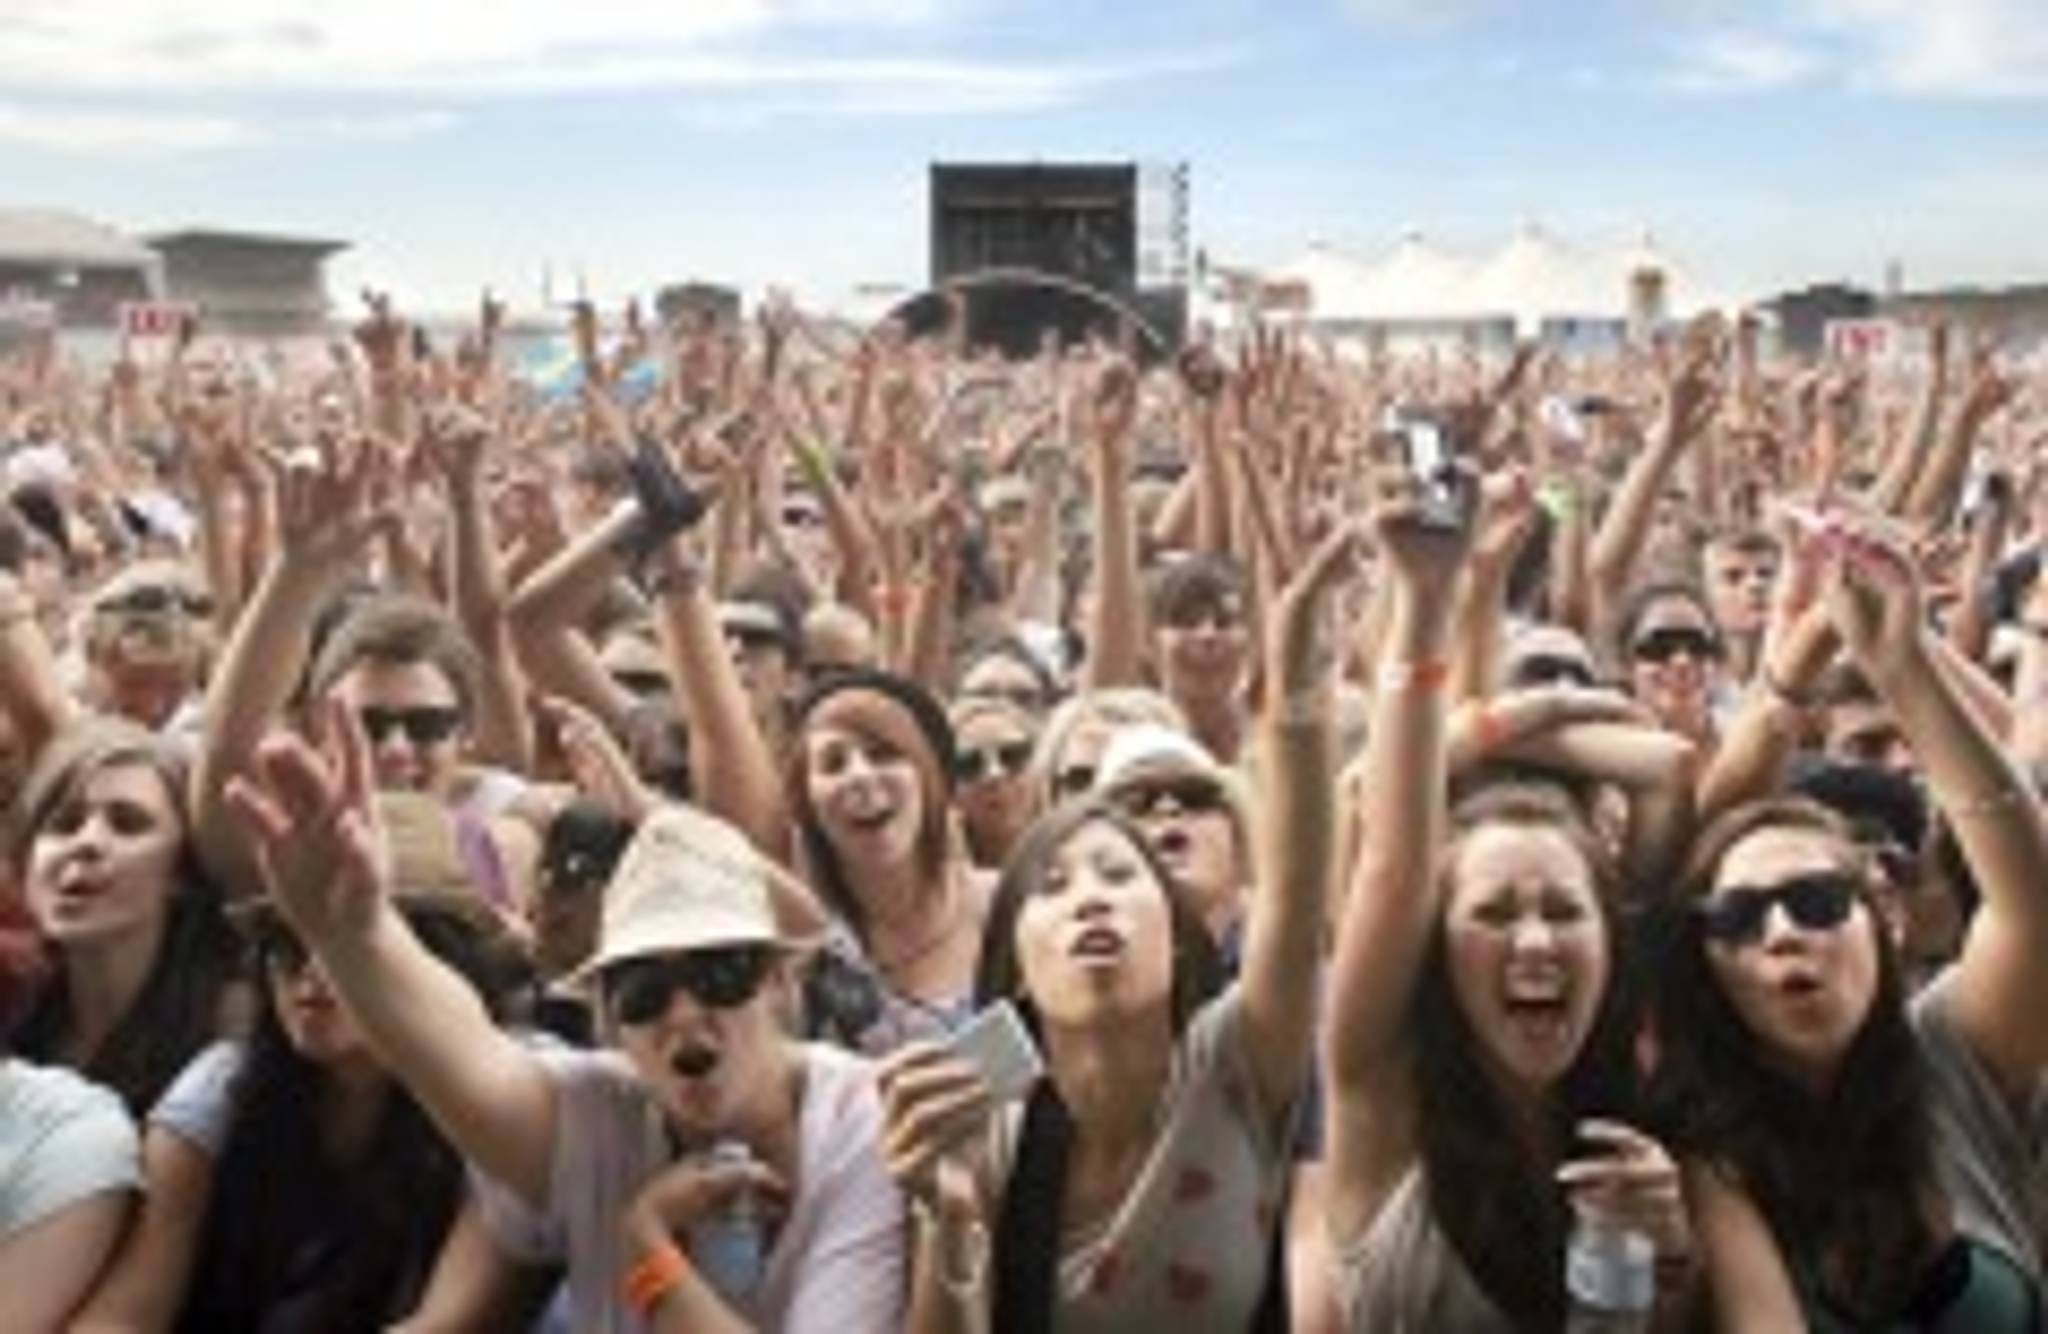 UK's 'music tourism' boom